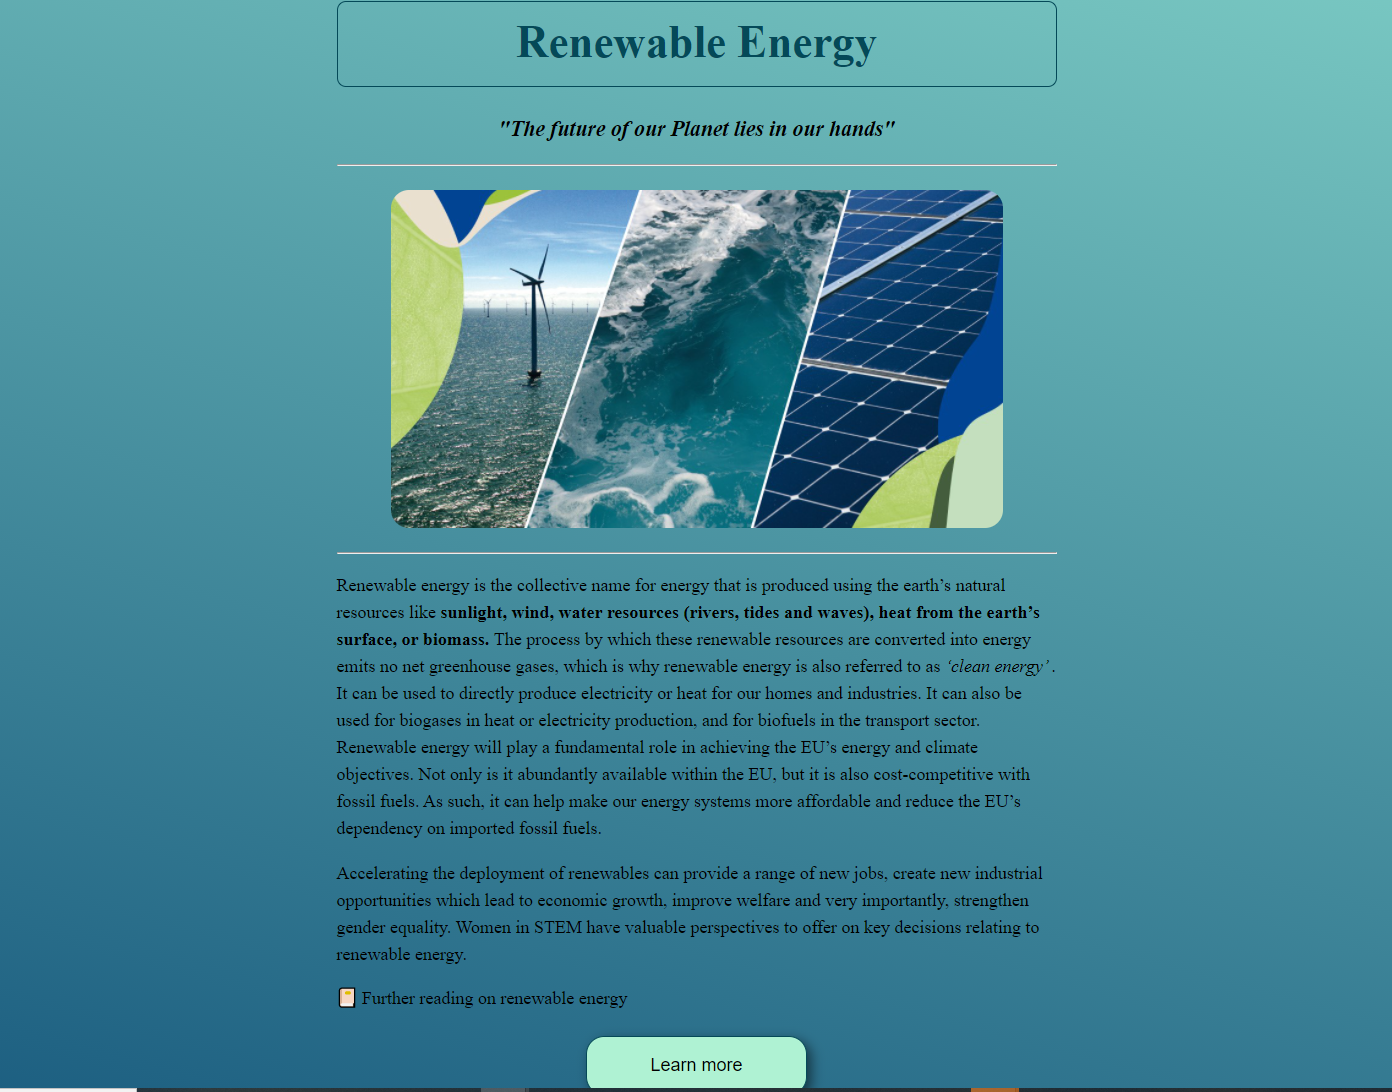 Renewable energy website image